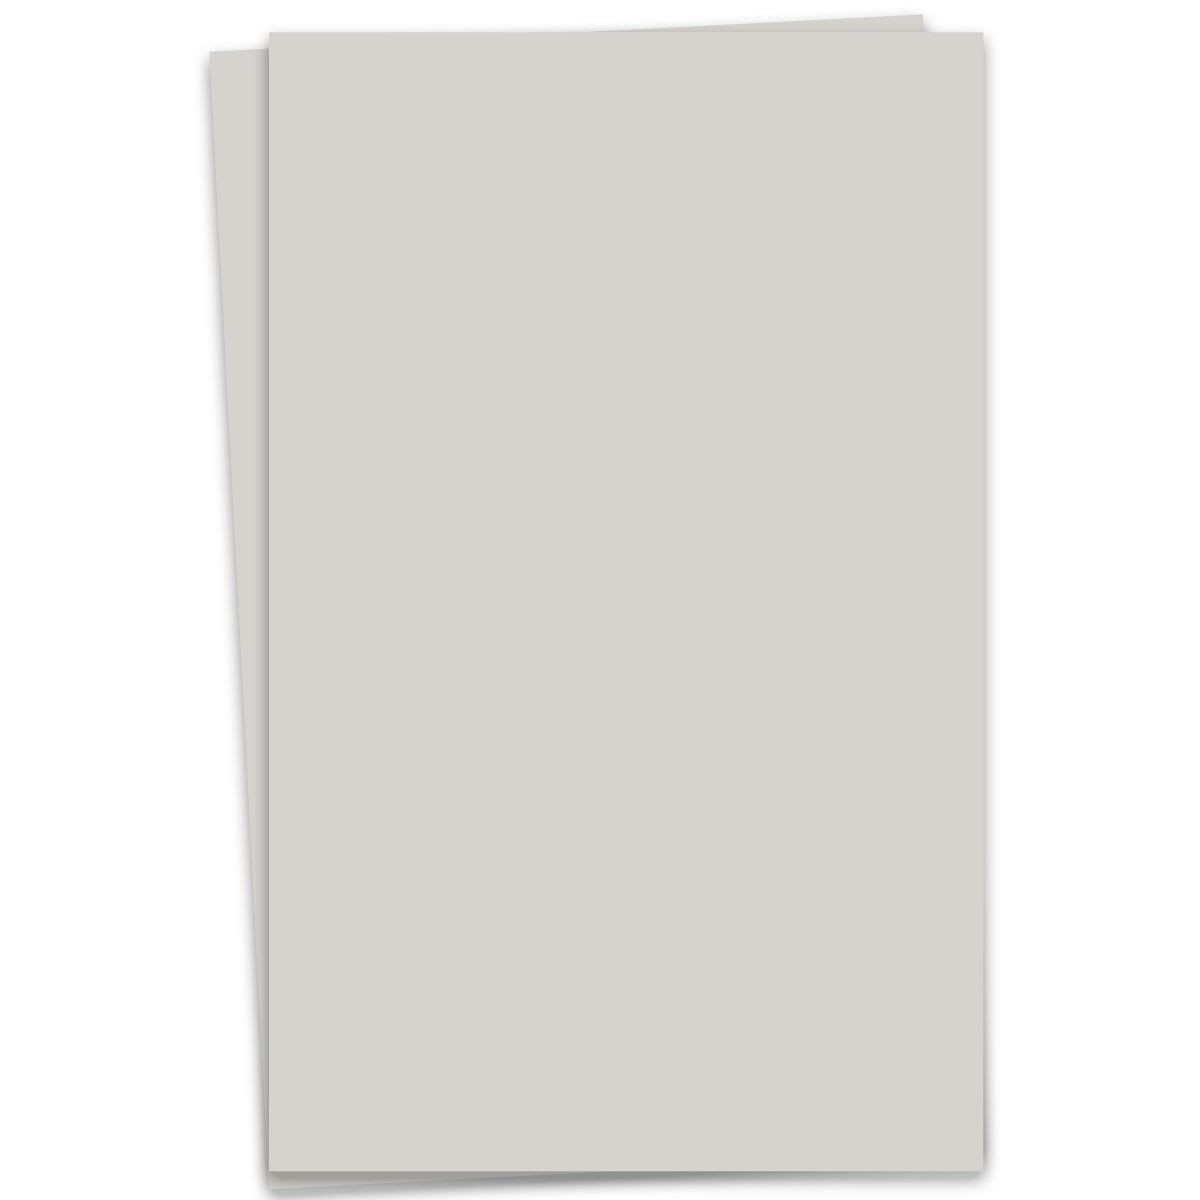 Burano SKY BLUE (08) - 8.5x11 Lightweight Cardstock Paper - 52lb